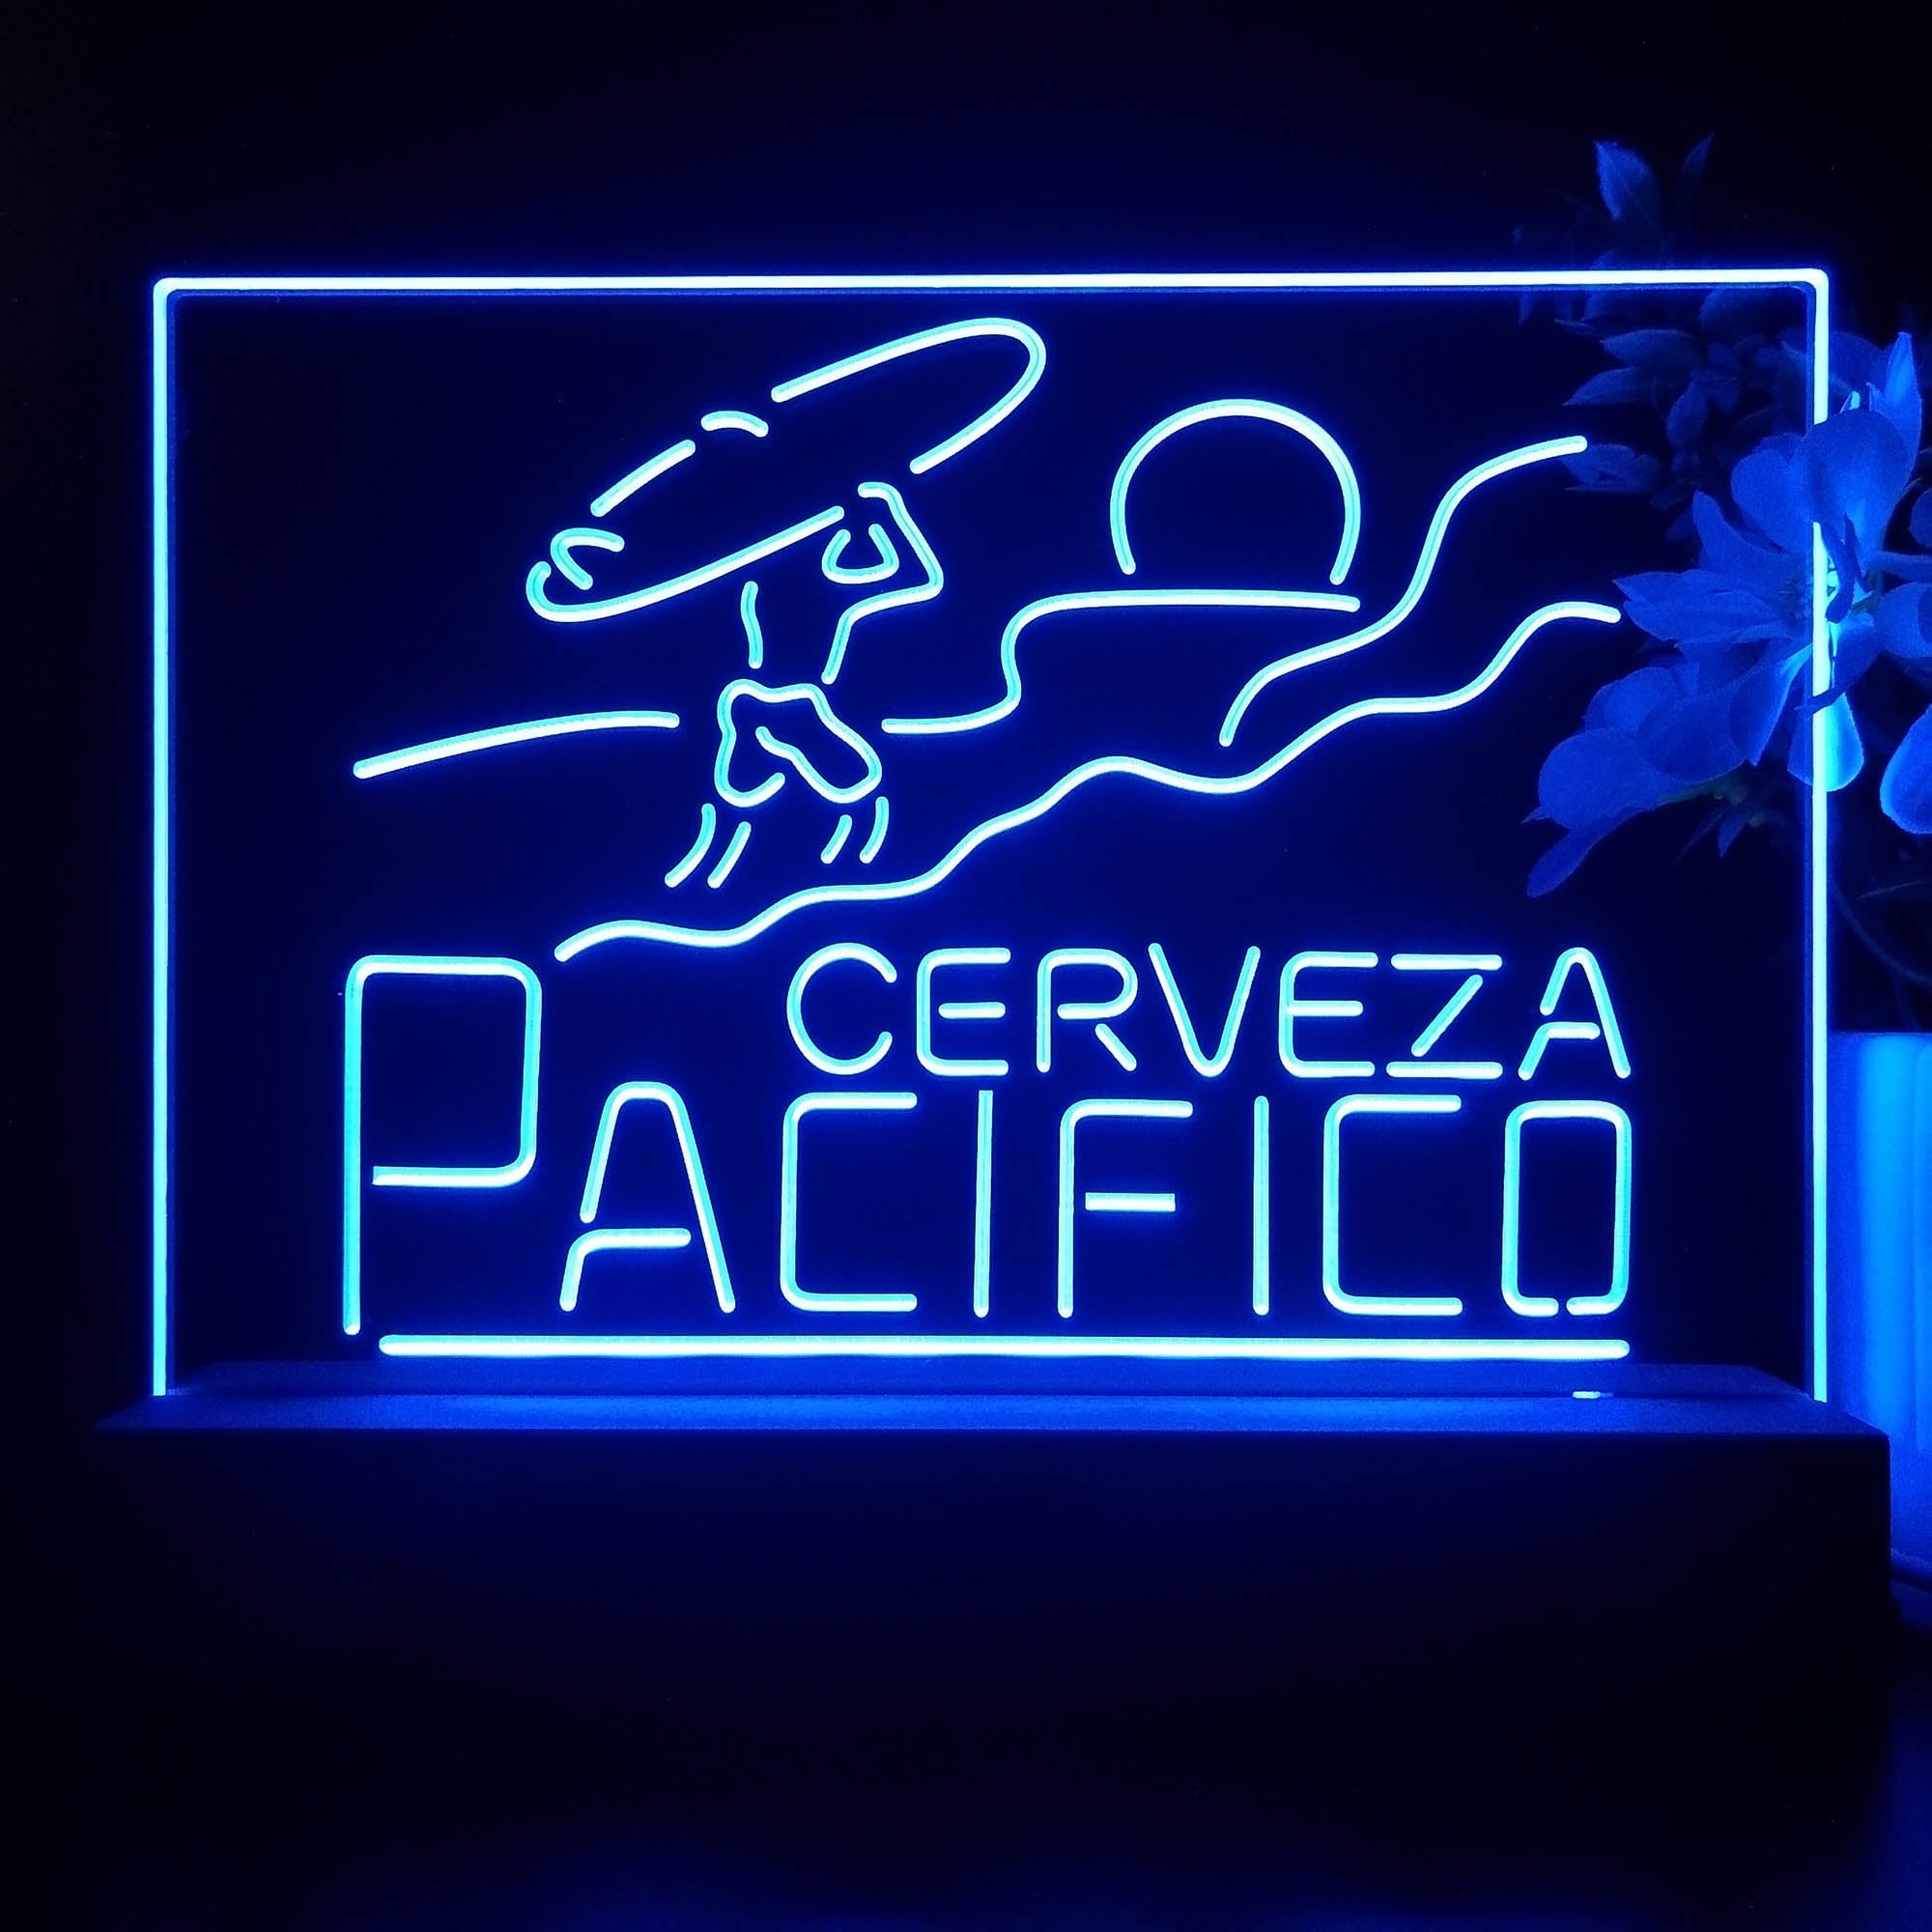 Pacifico Clara Mexican Cerveza Neon Sign Pub Bar Lamp